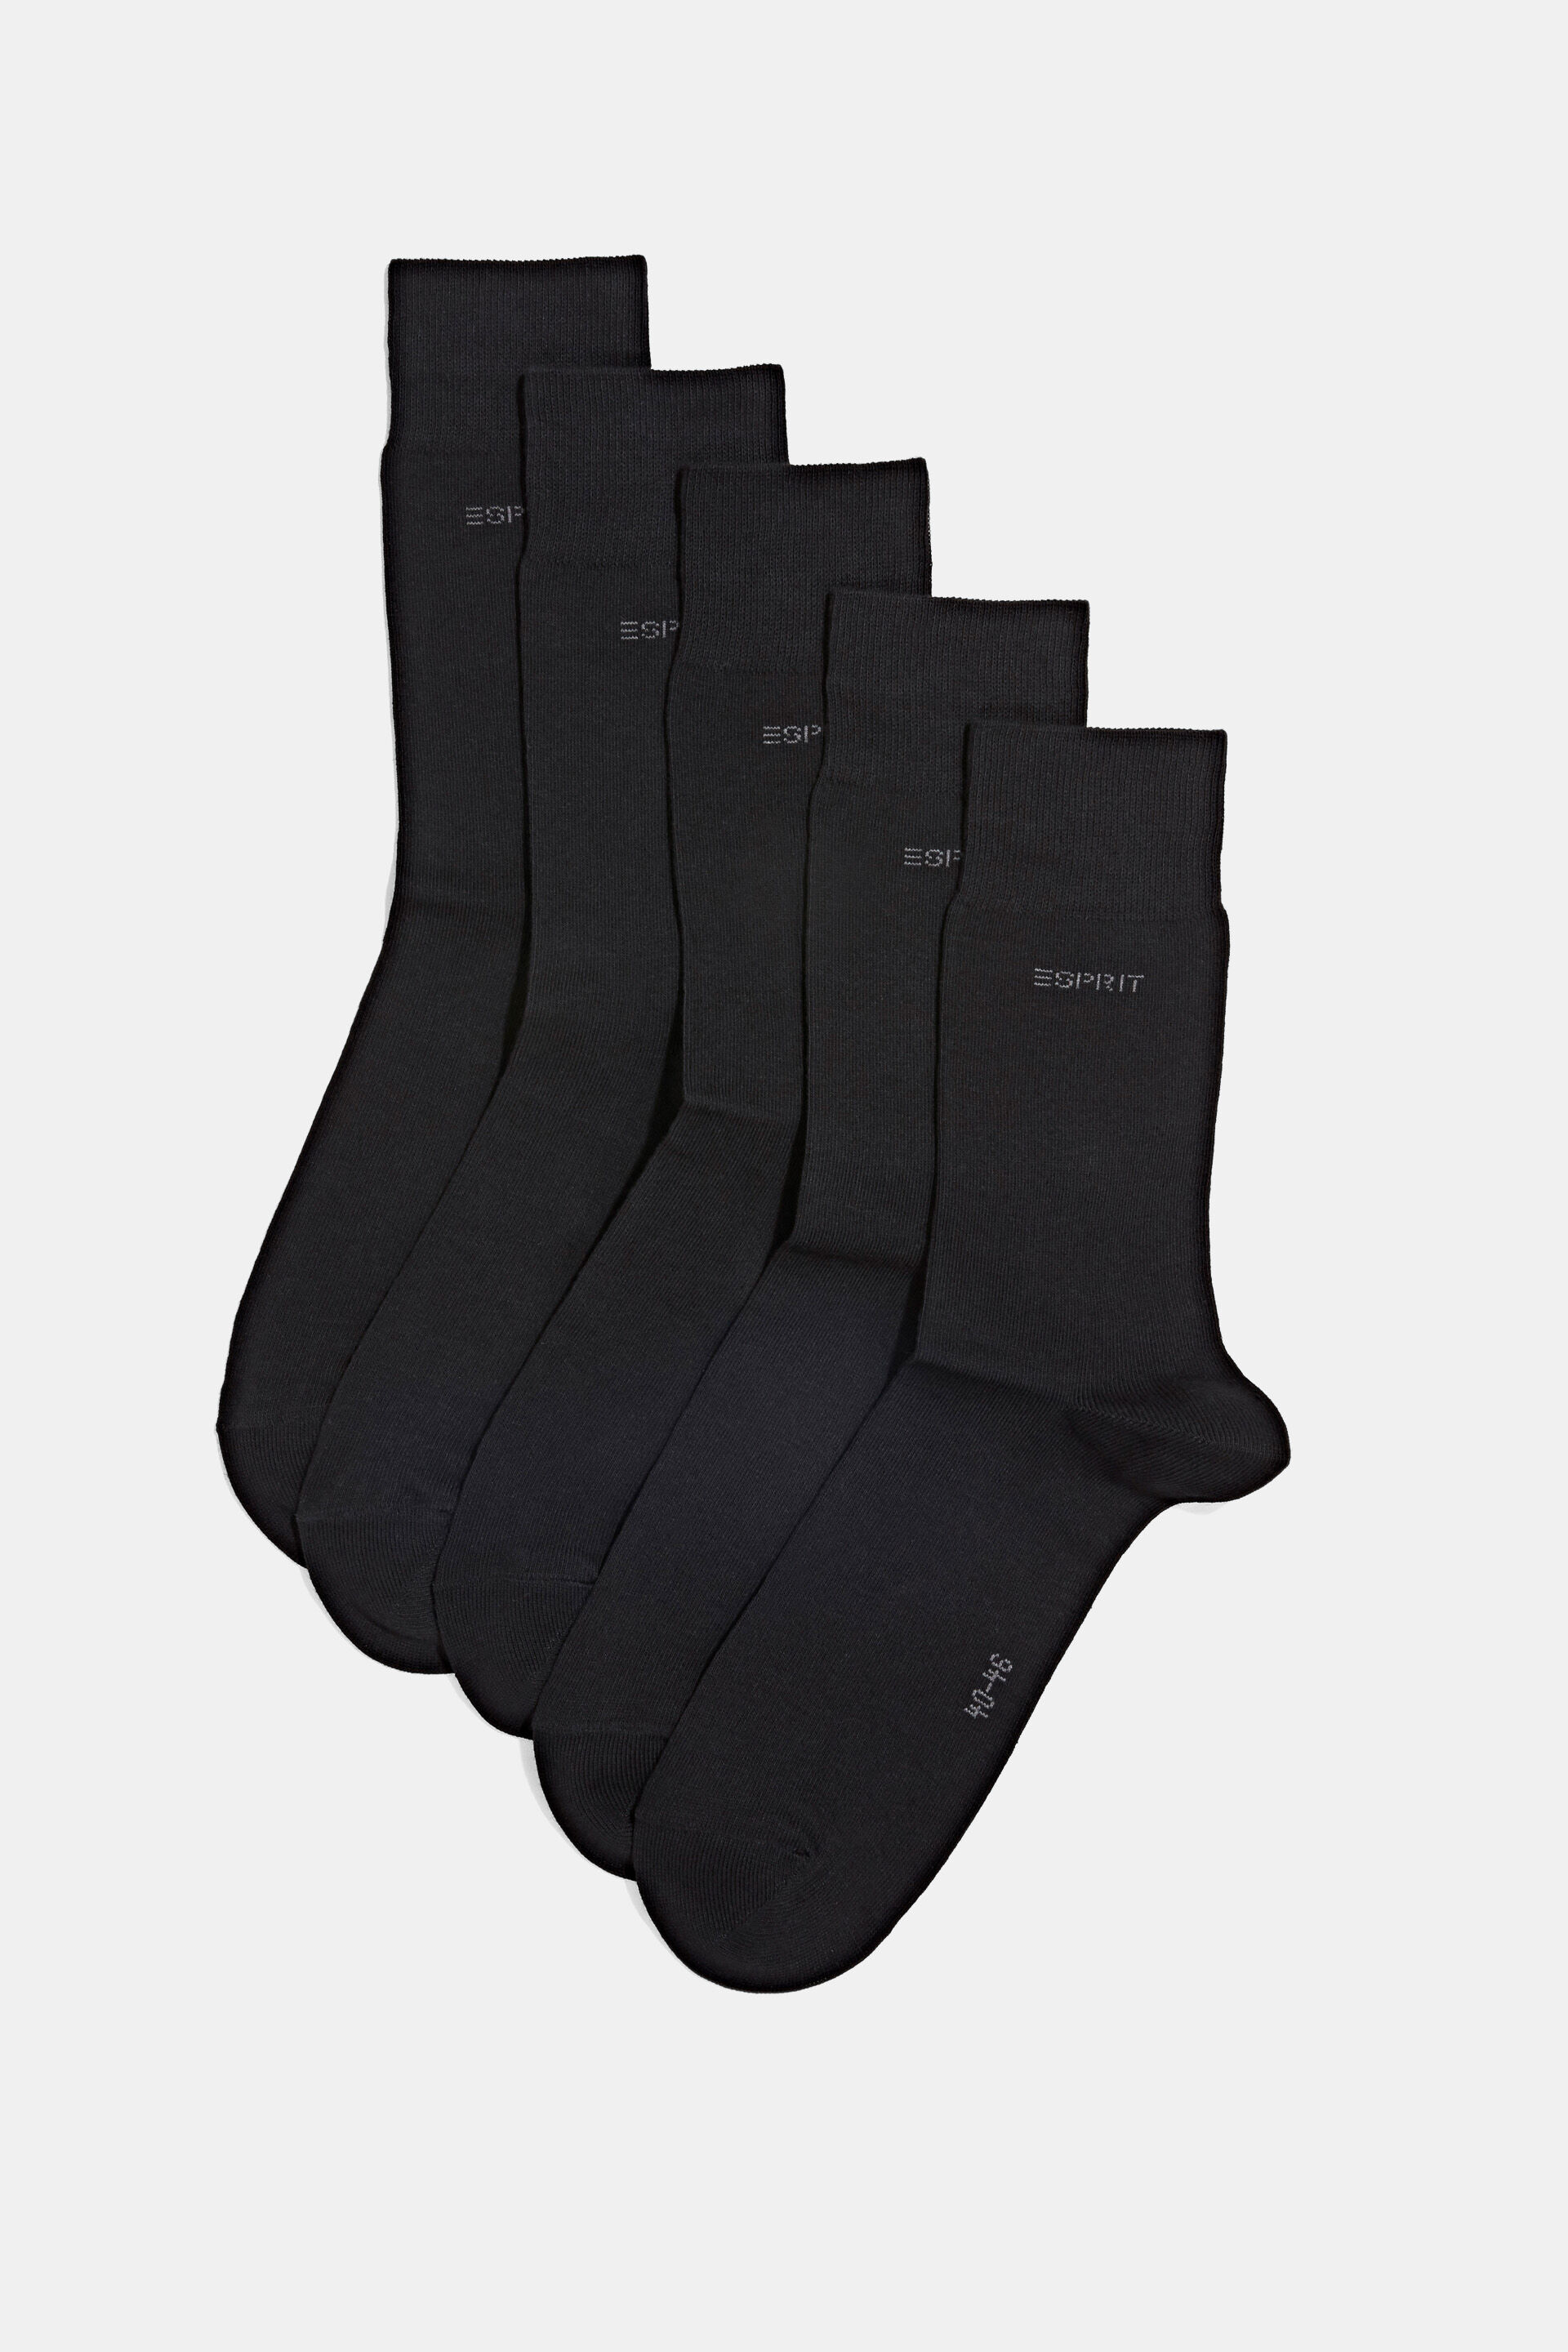 Esprit Mode Pack of 5 socks, blended organic cotton